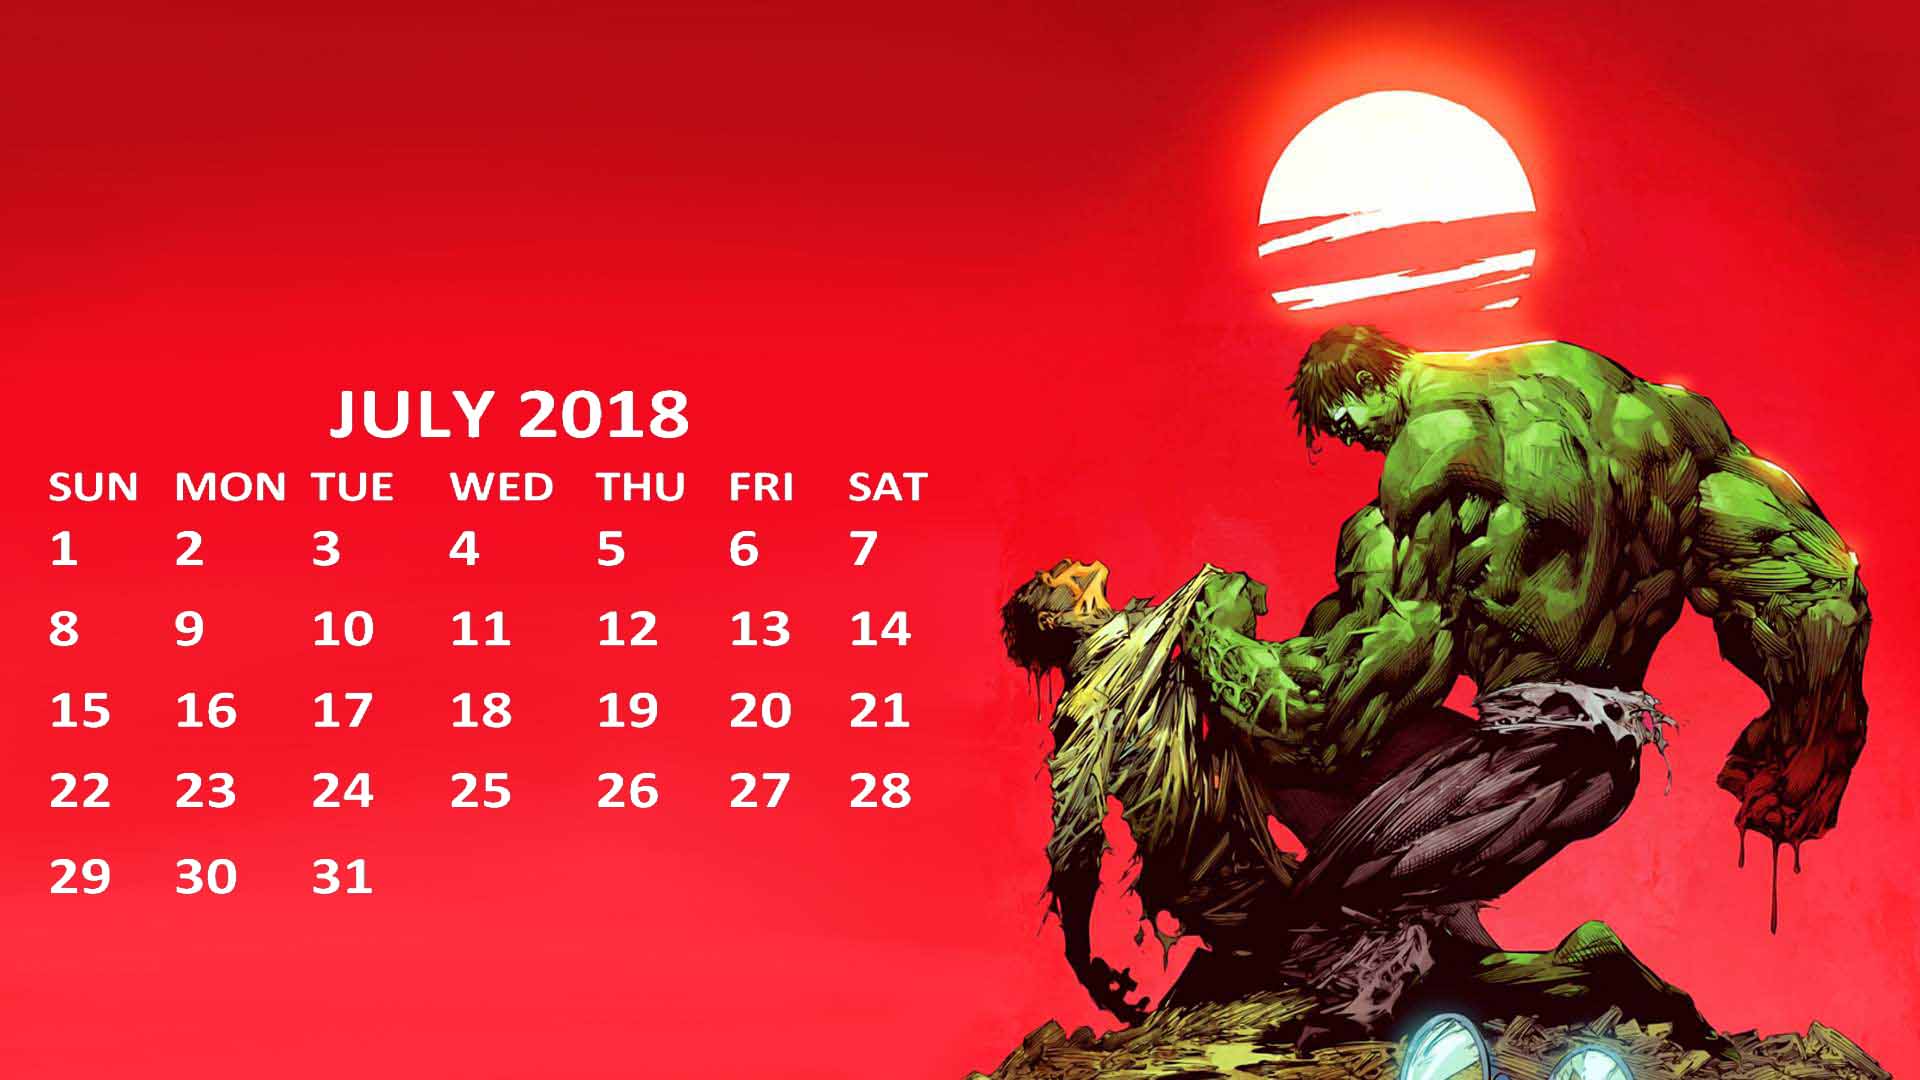 July 2018 Calendar HD Wallpaper. Calendar 2018 Printable